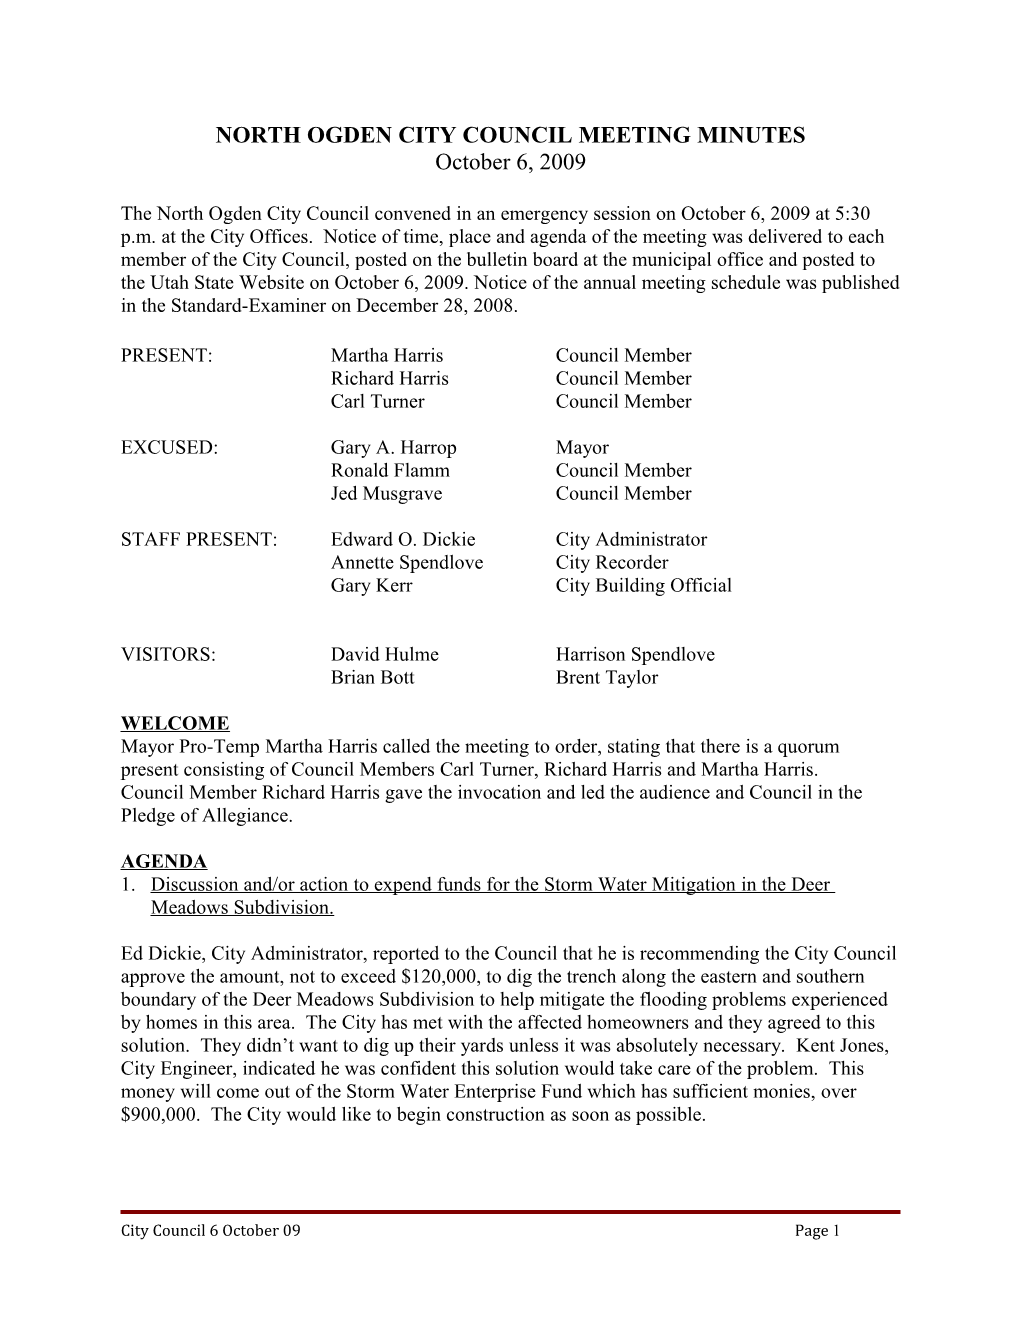 North Ogden City Council Meeting Minutes